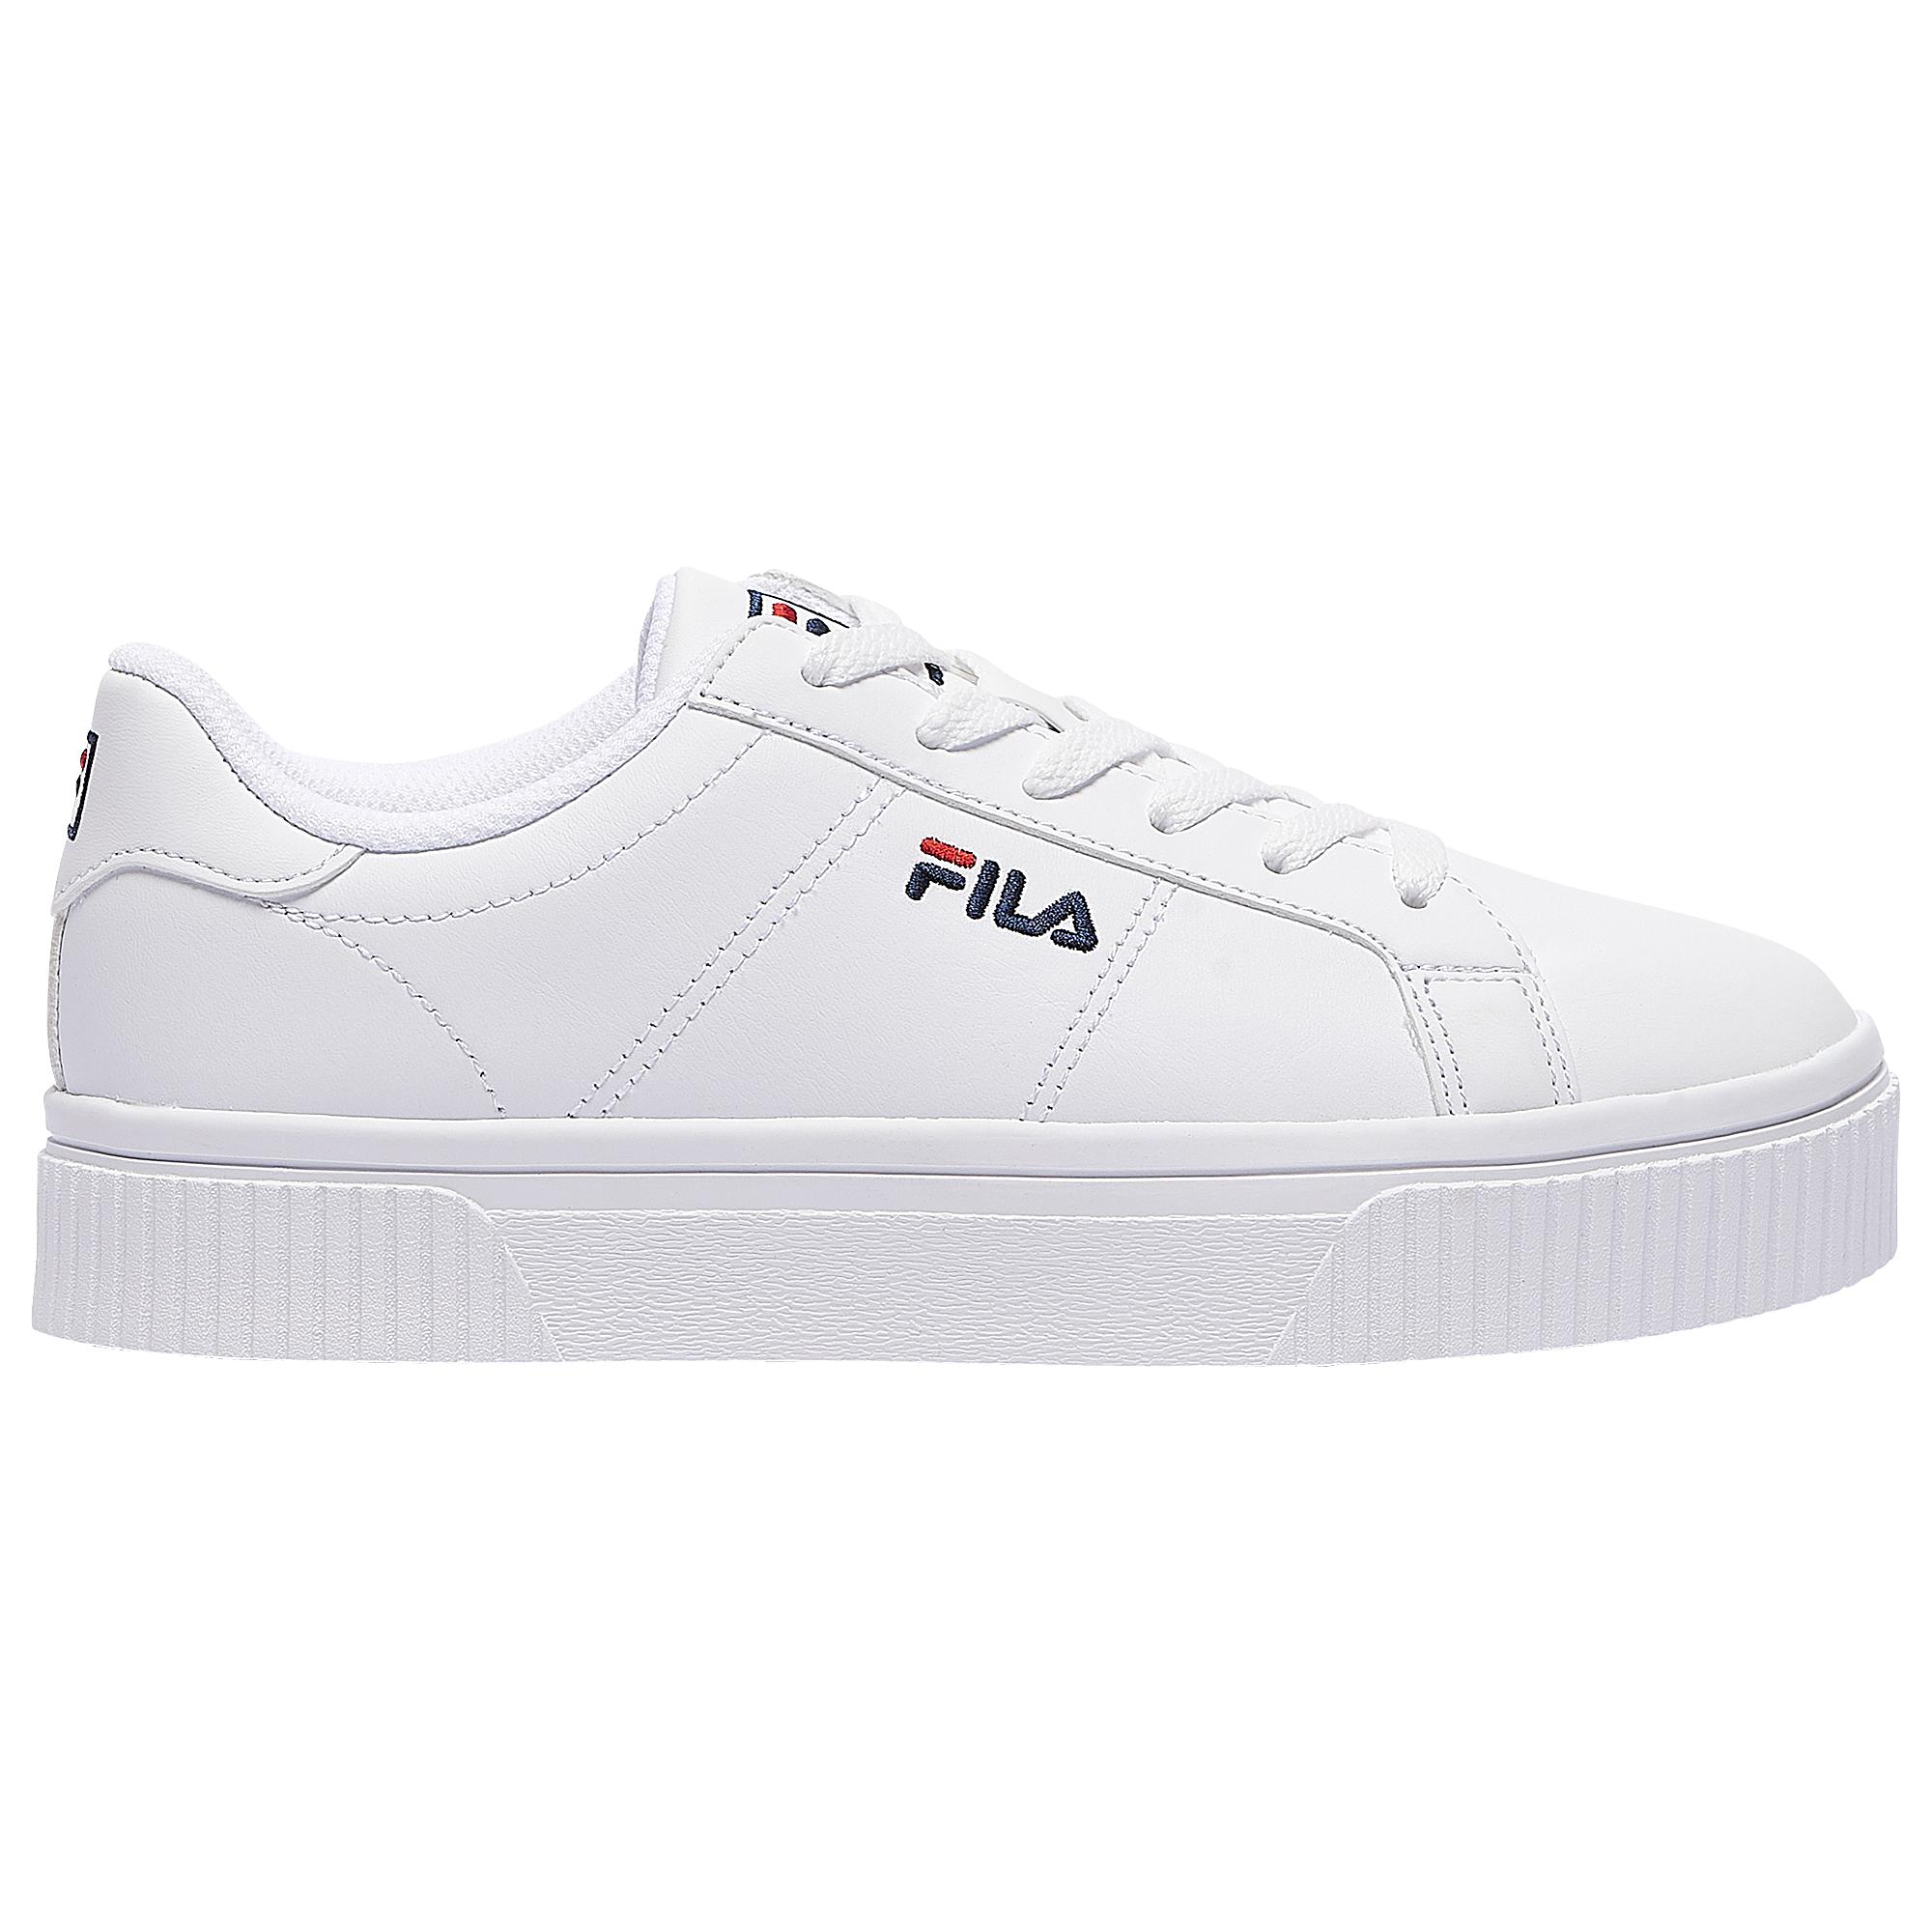 Fila Denim Panache 19 - Shoes in White/Navy/Red (White) - Save 19% - Lyst